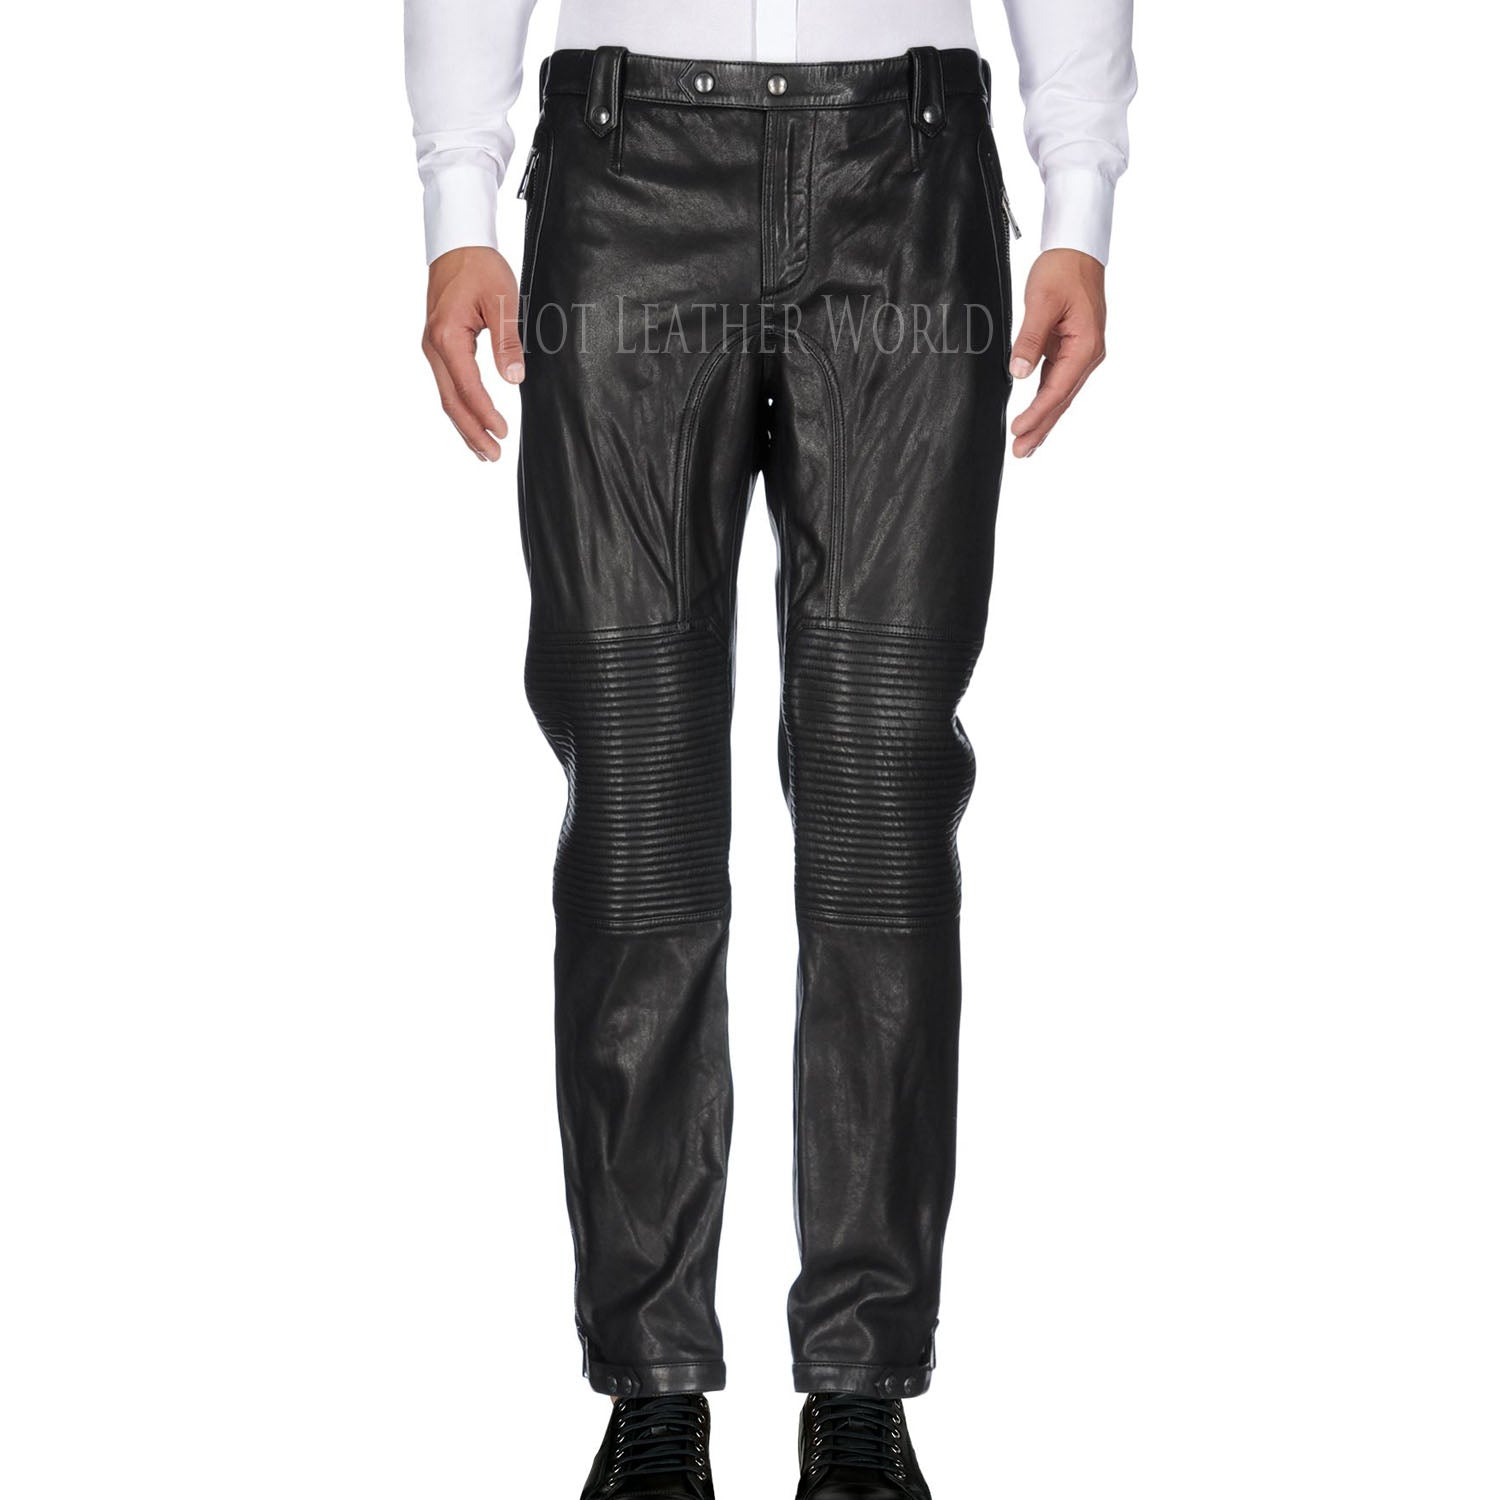 Classical Style Men Leather Pant -  HOTLEATHERWORLD